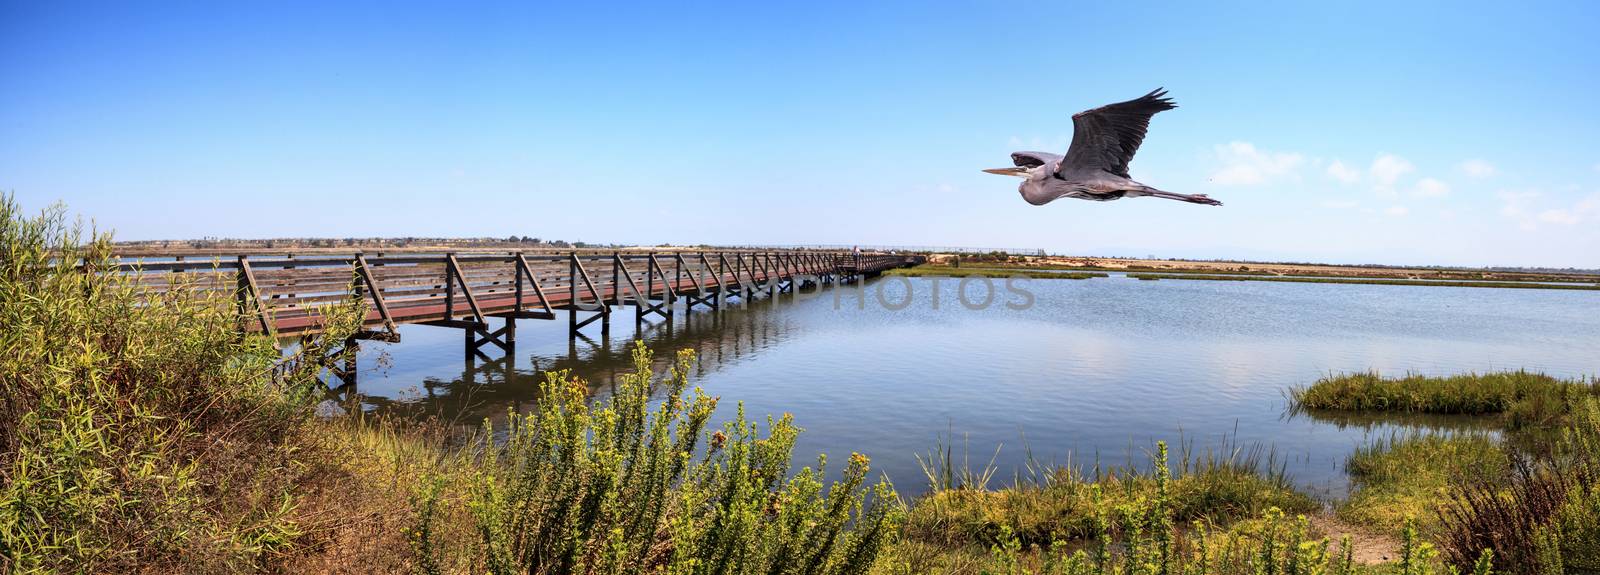 Great blue heron over a Bridge along the peaceful and tranquil marsh of Bolsa Chica wetlands in Huntington Beach, California, USA